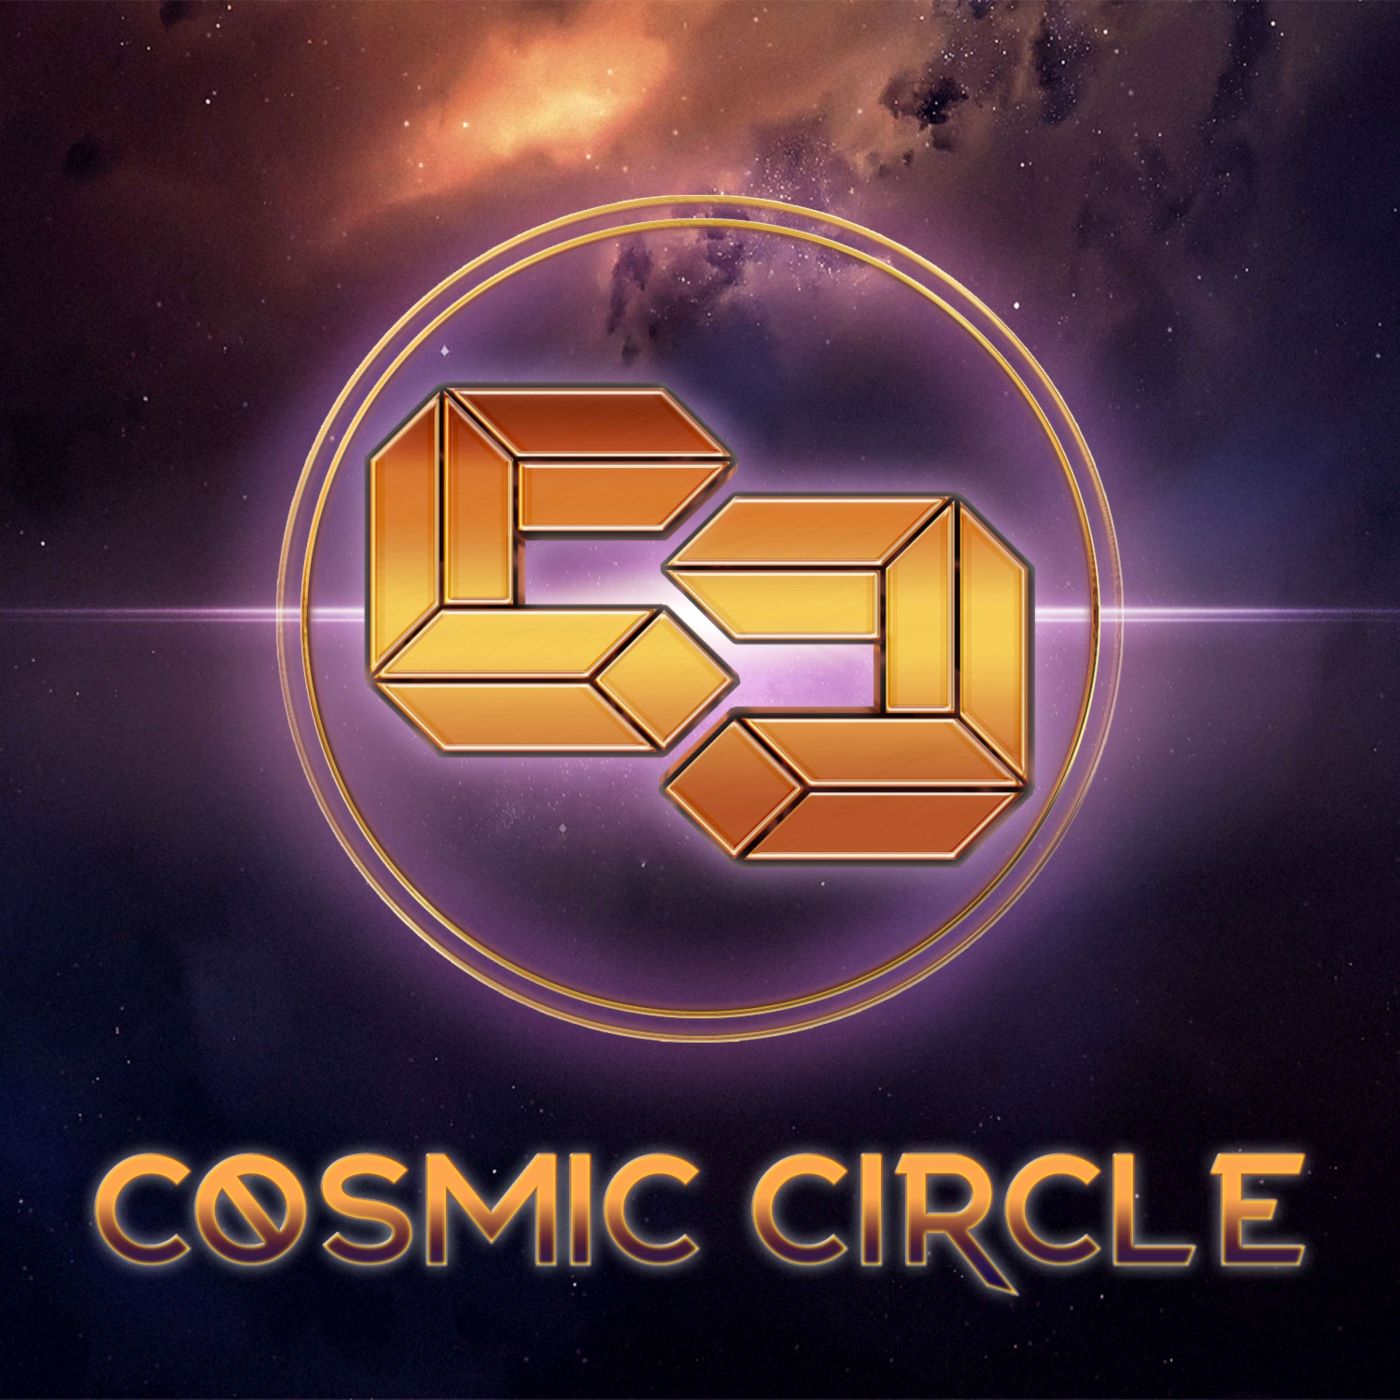 Cosmic Circle Ep. 42: Star Wars Ahsoka Season 1 Finale Discussion (Spoilers)